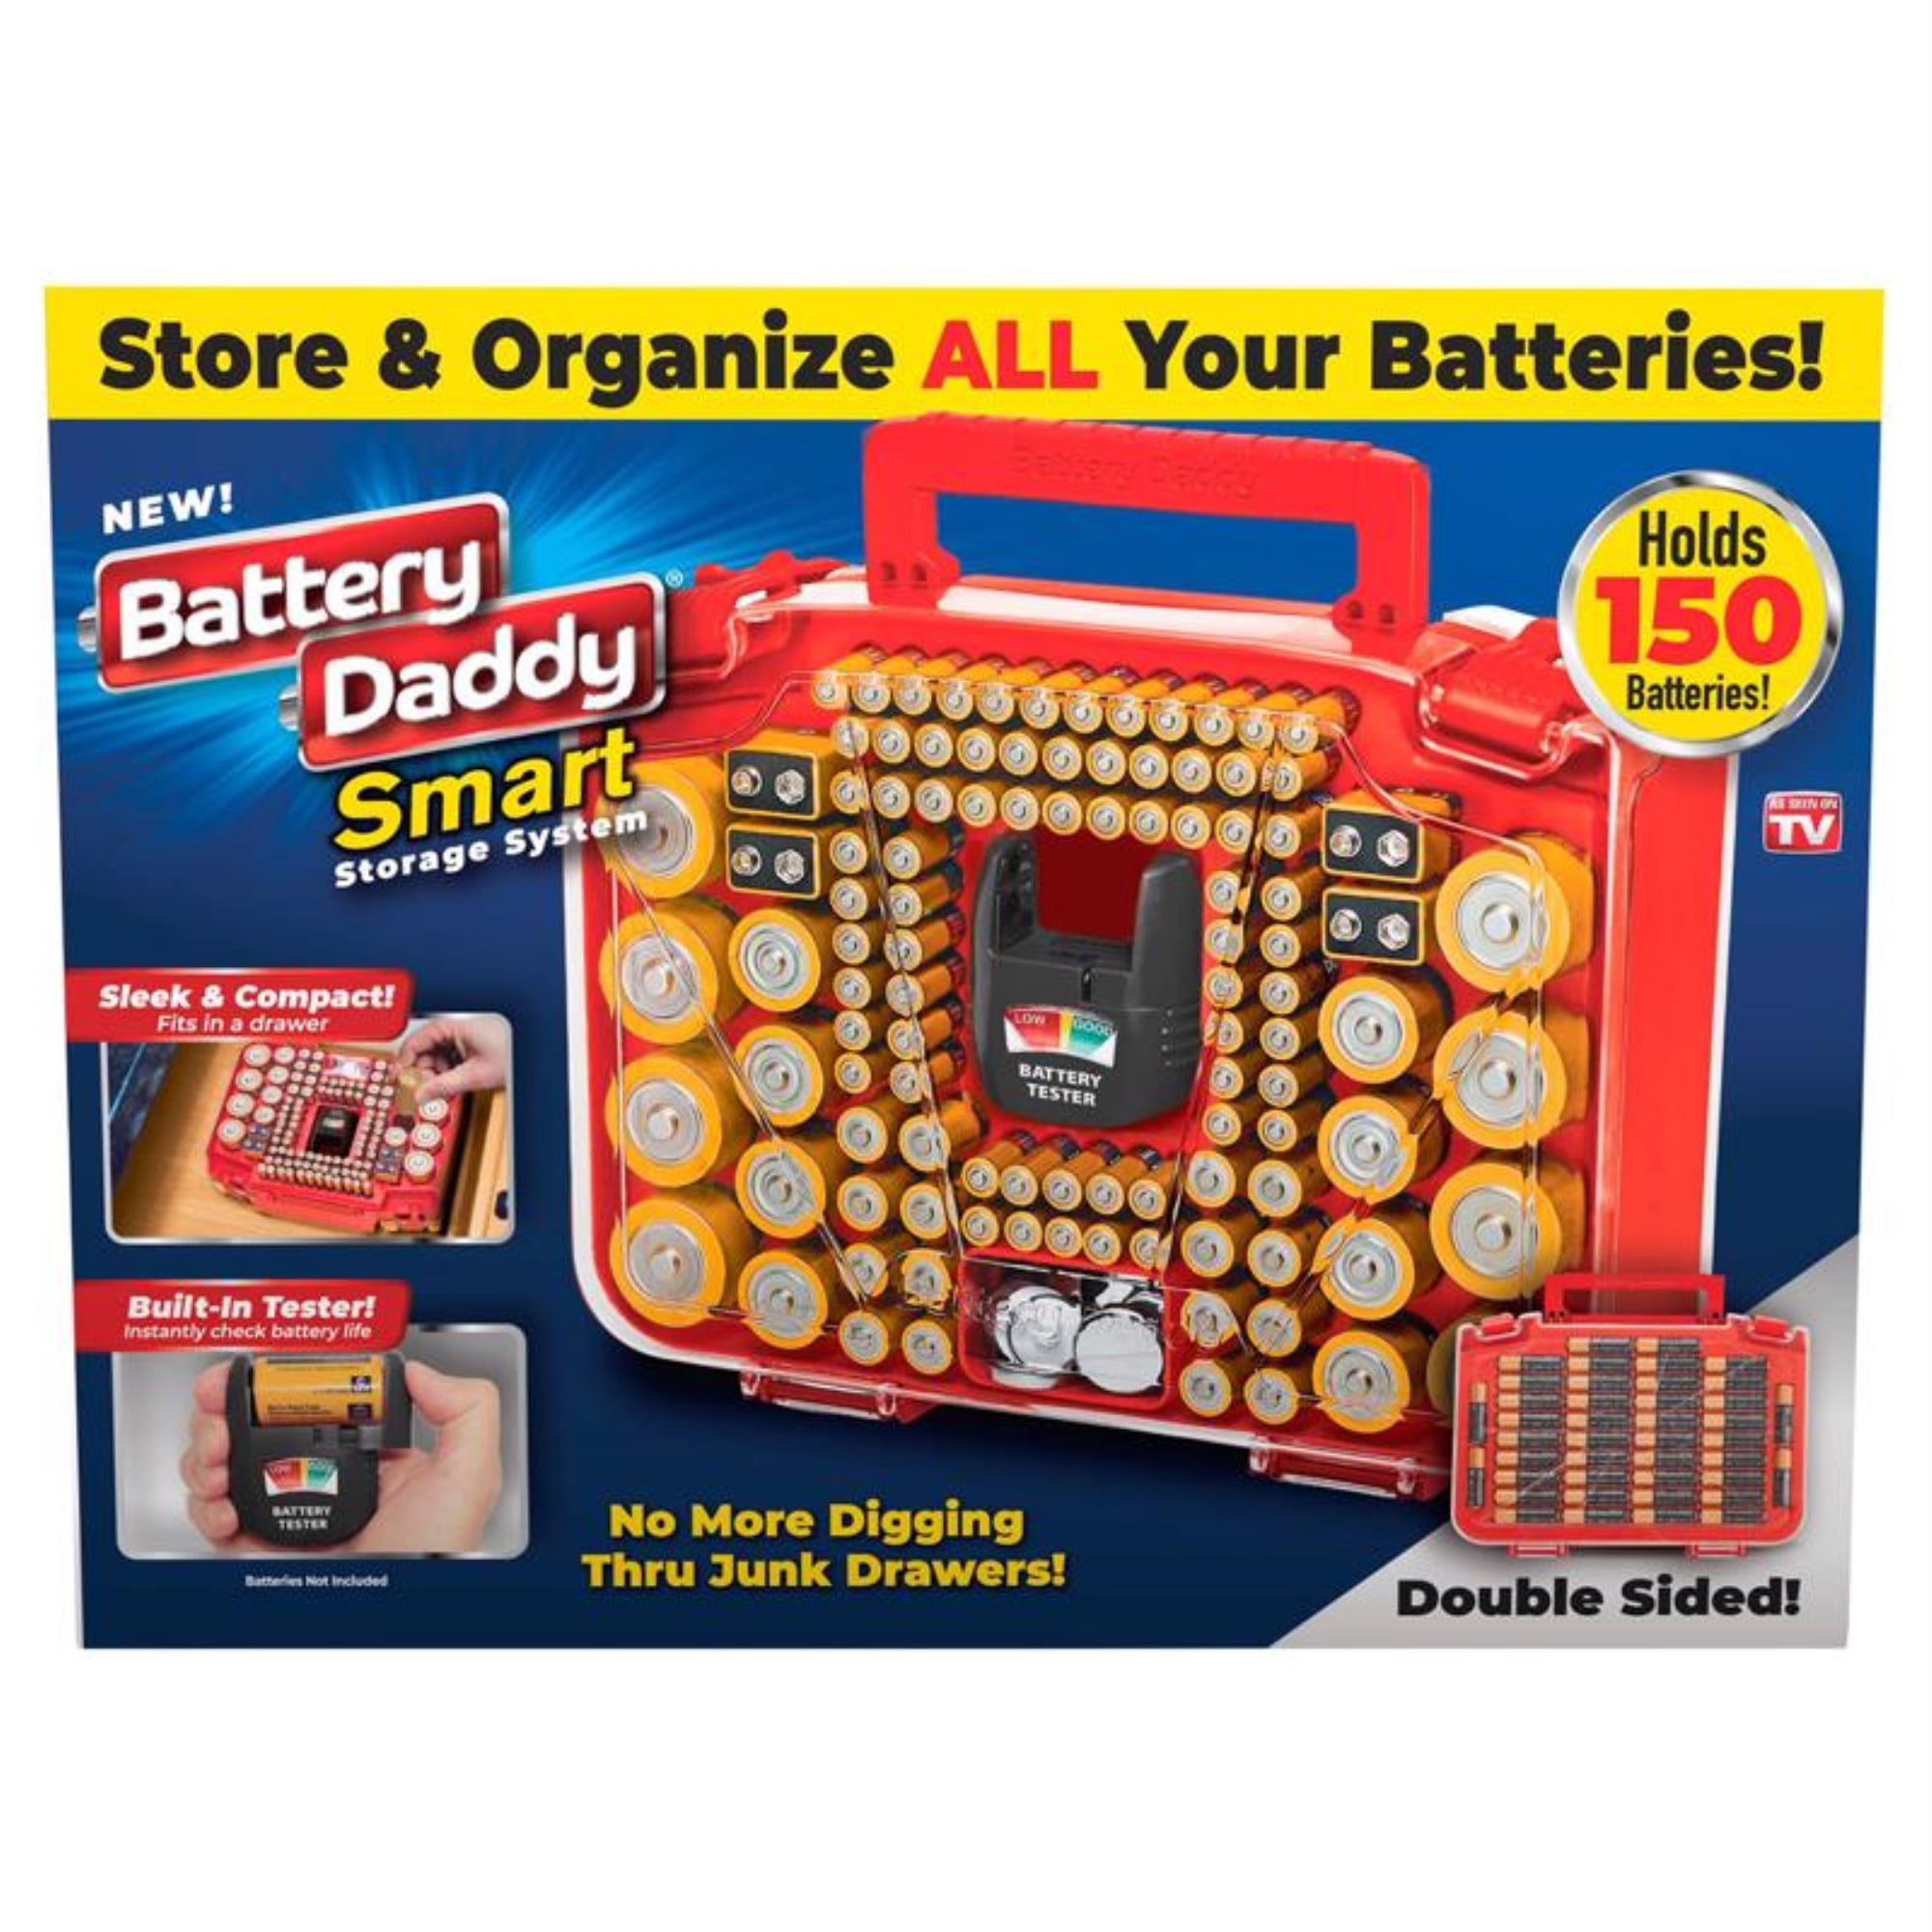 Battery Daddy Smart Battery Storage System